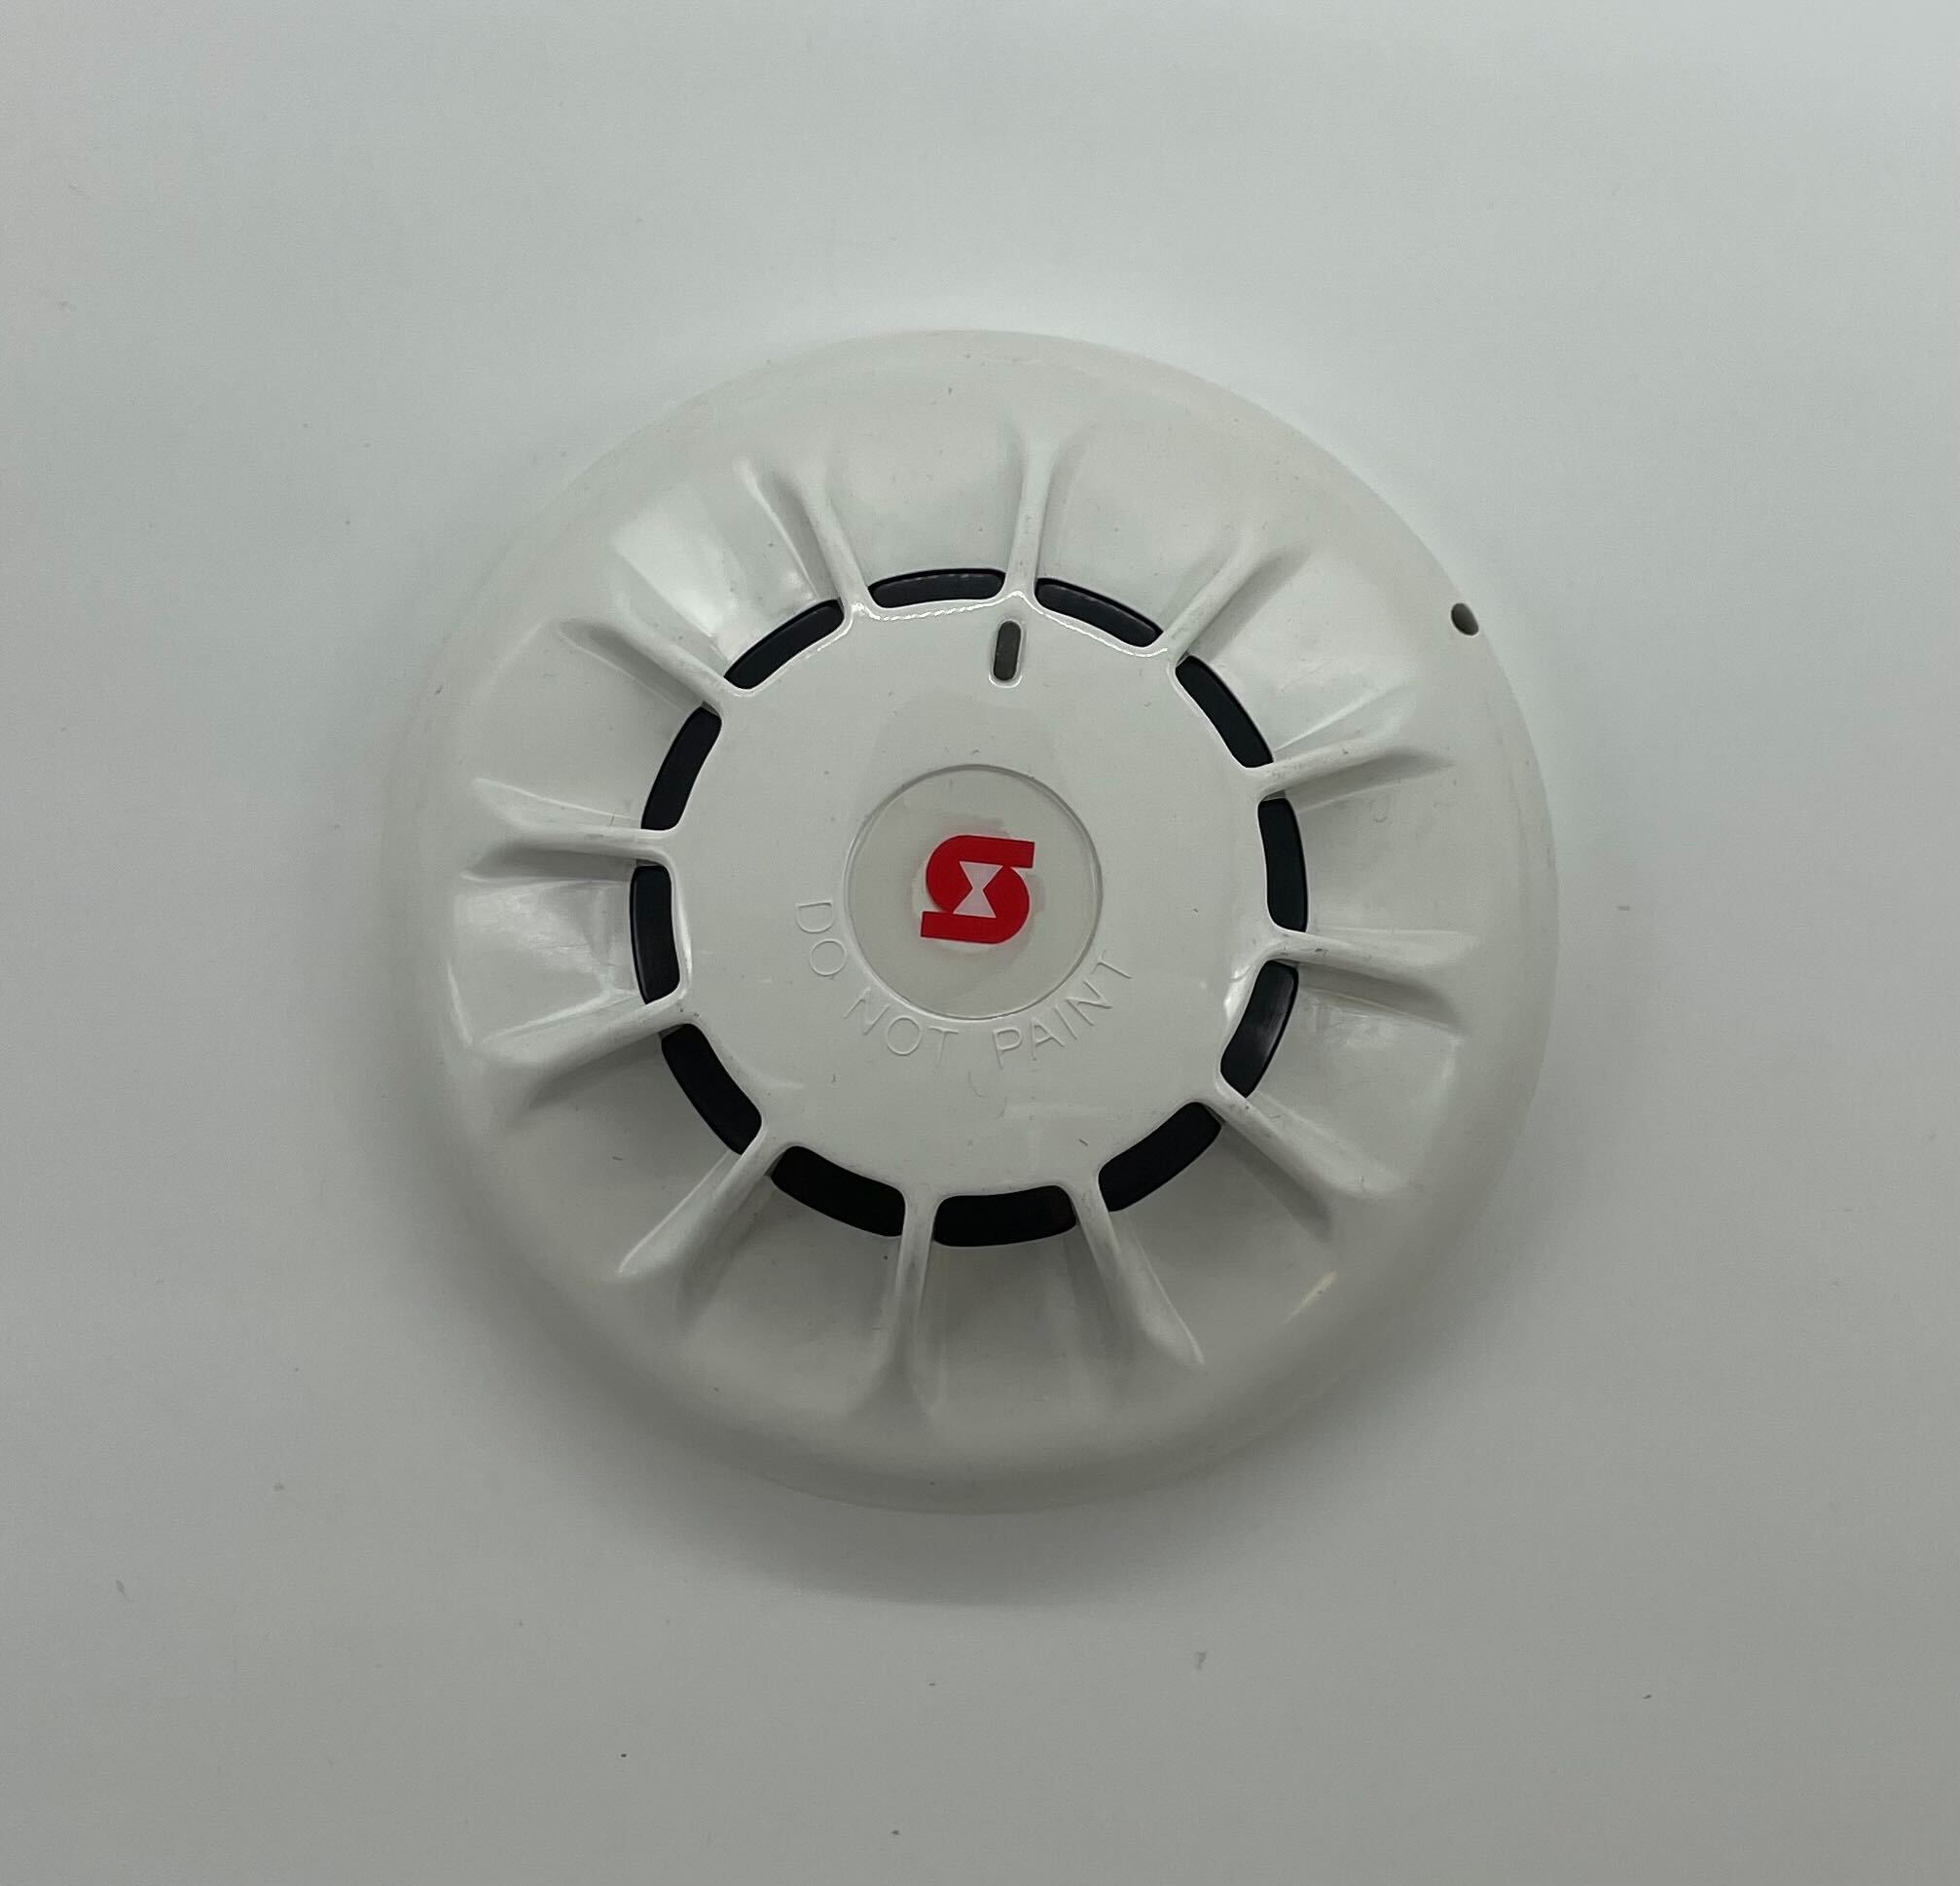 Simplex 4098-5202 Photo Sensor - The Fire Alarm Supplier